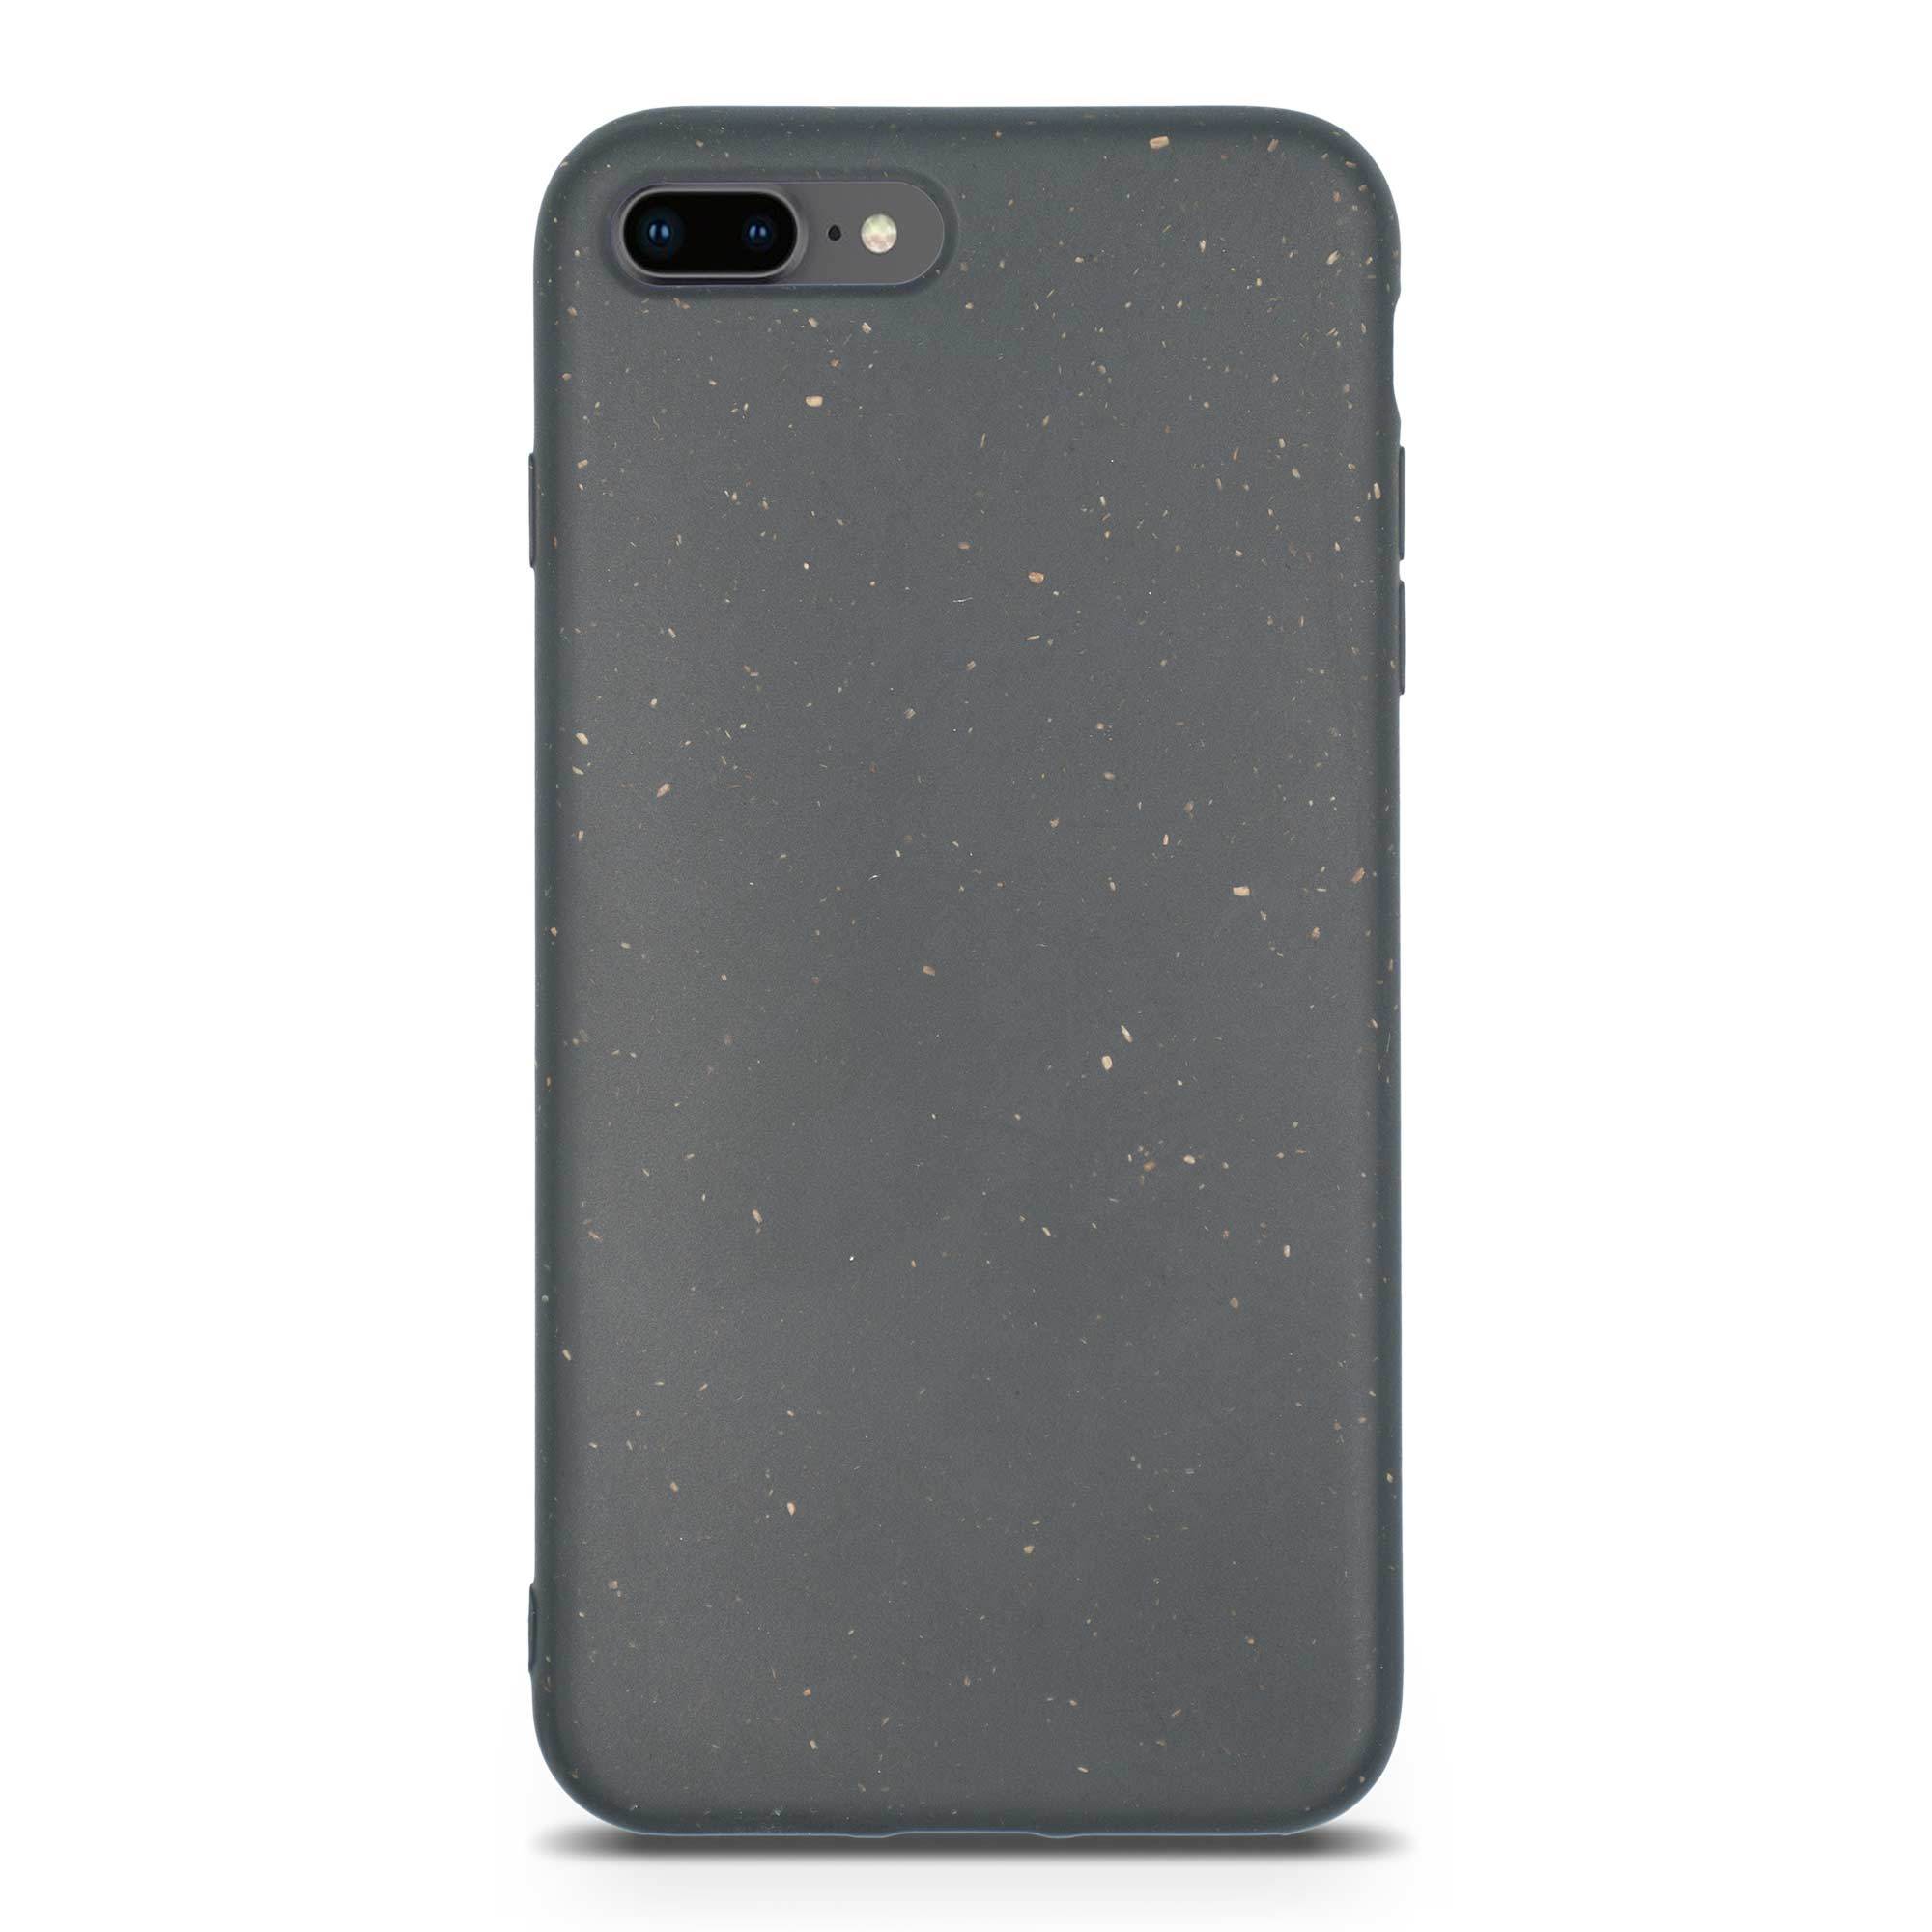 Carcasa Biodegradable para iPhone 7 Plus